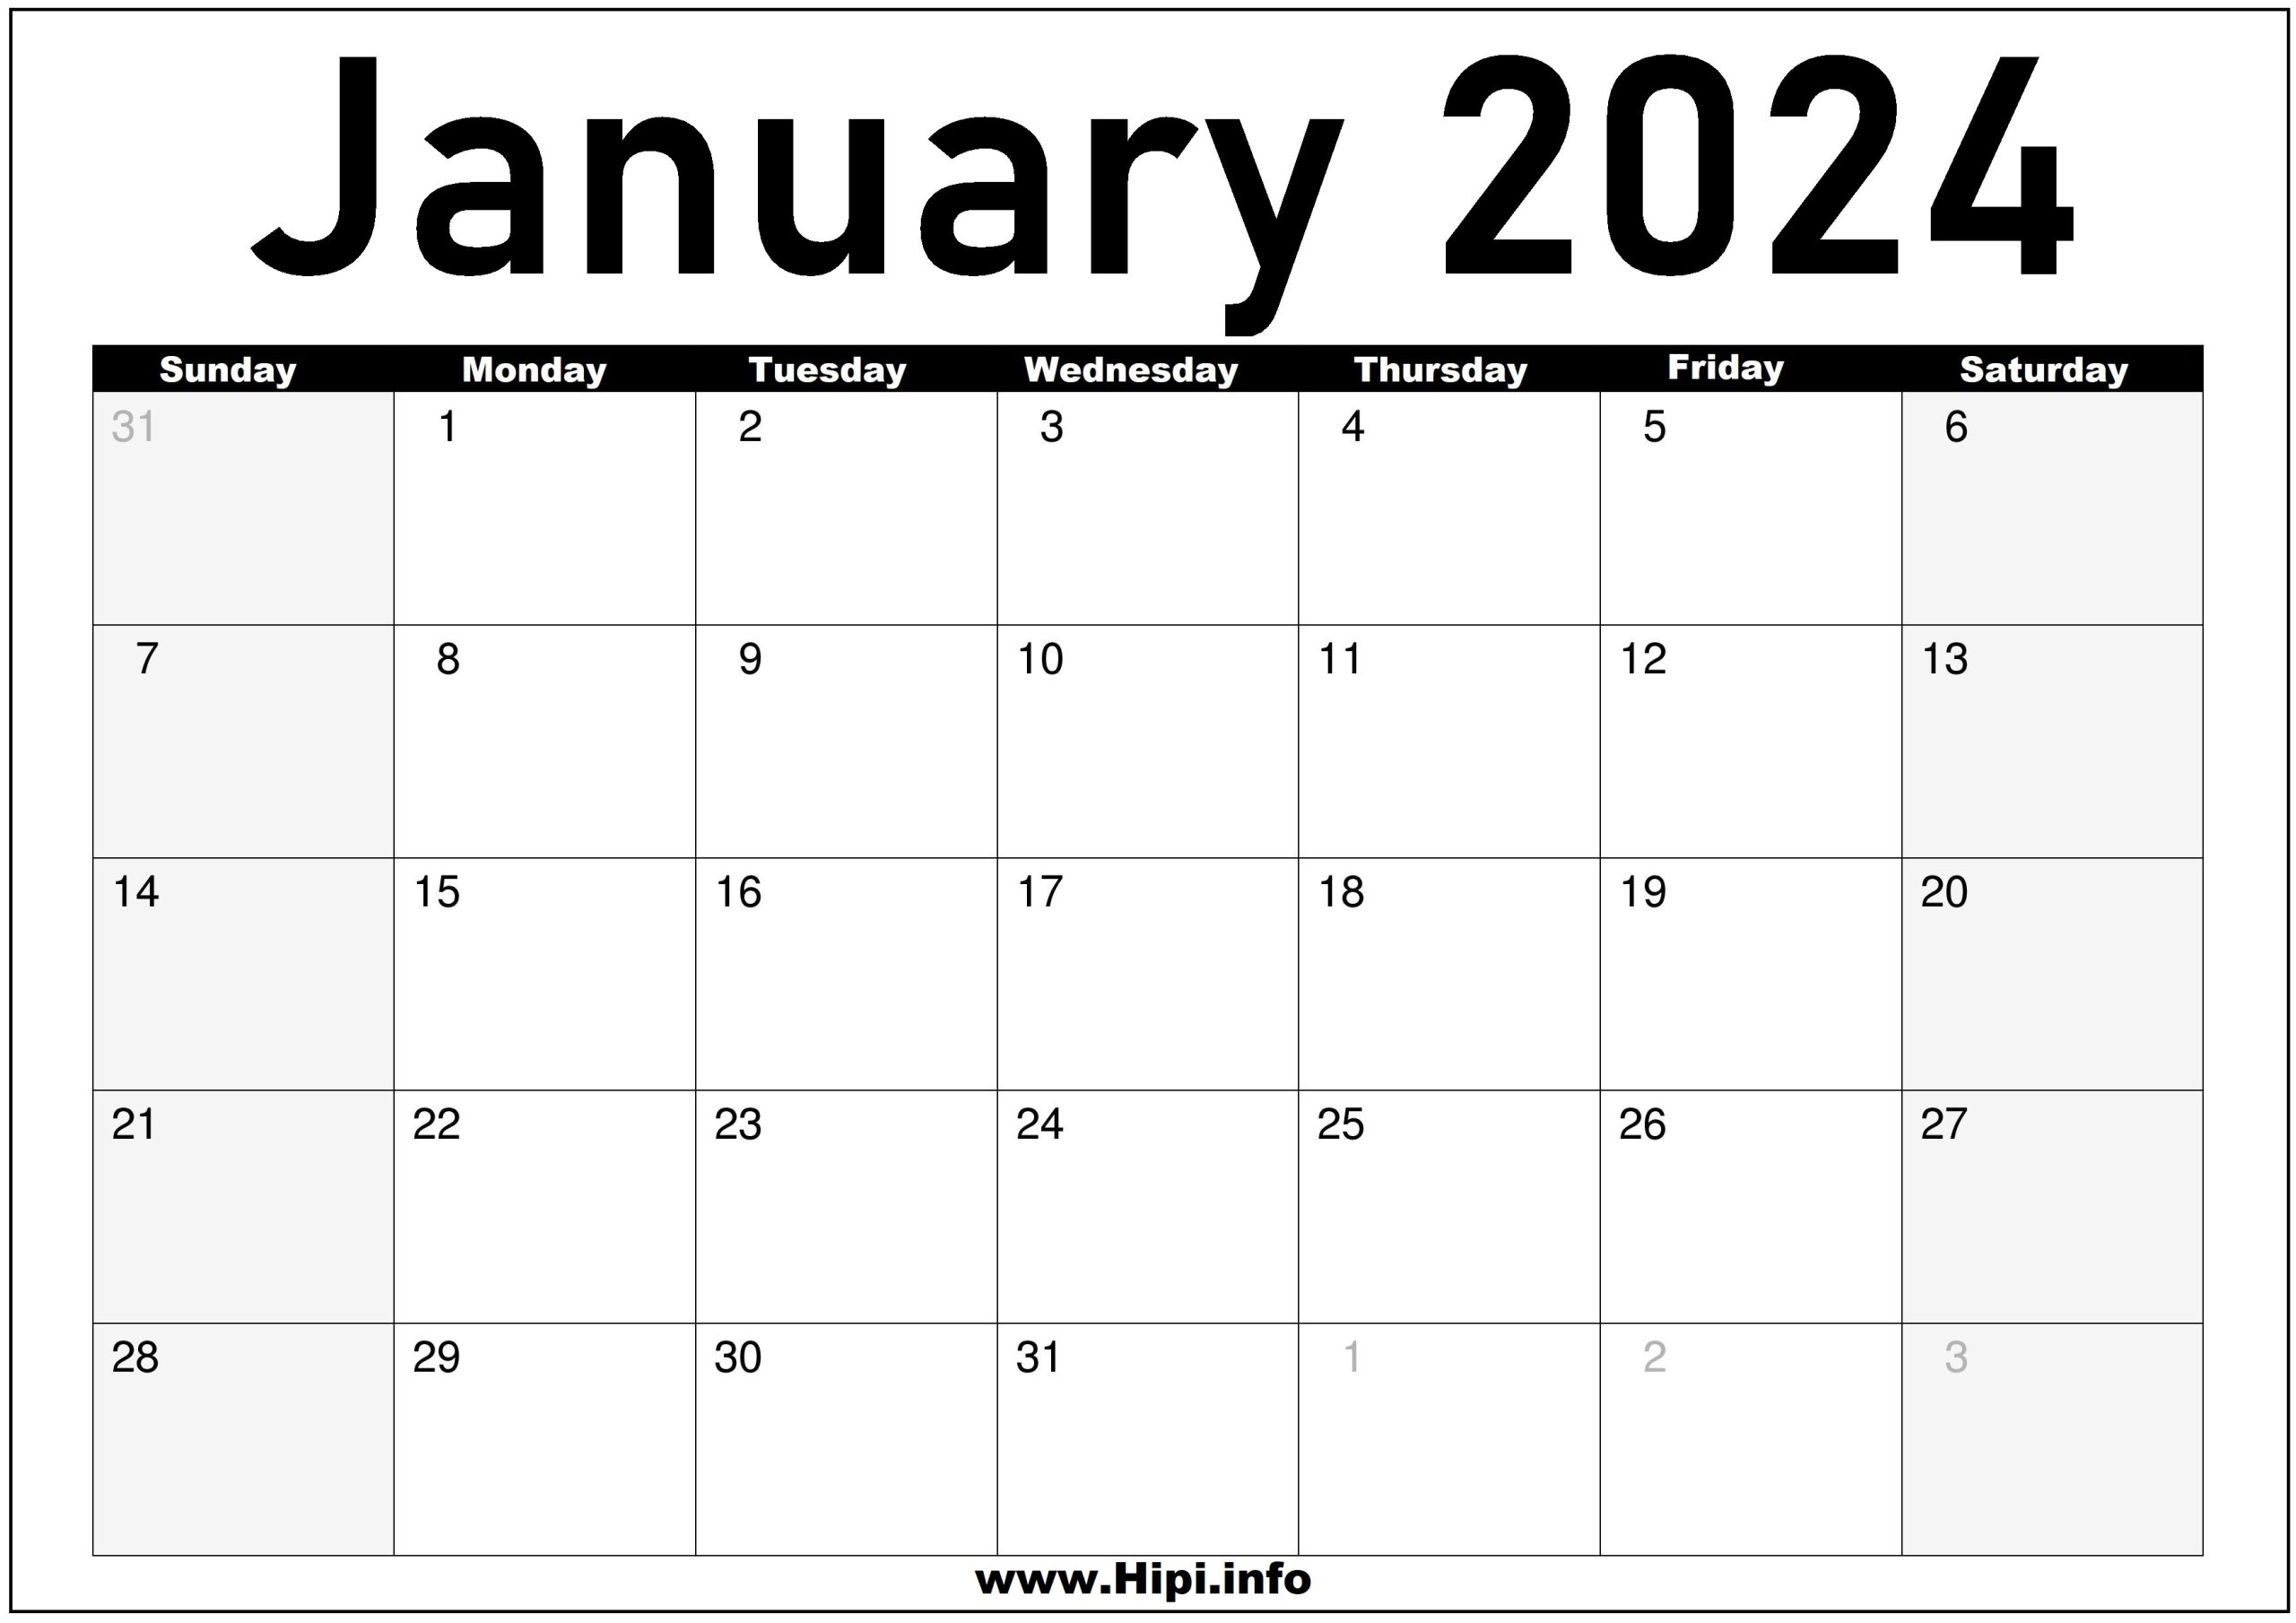 january-2024-calendar-monthly-hipi-info